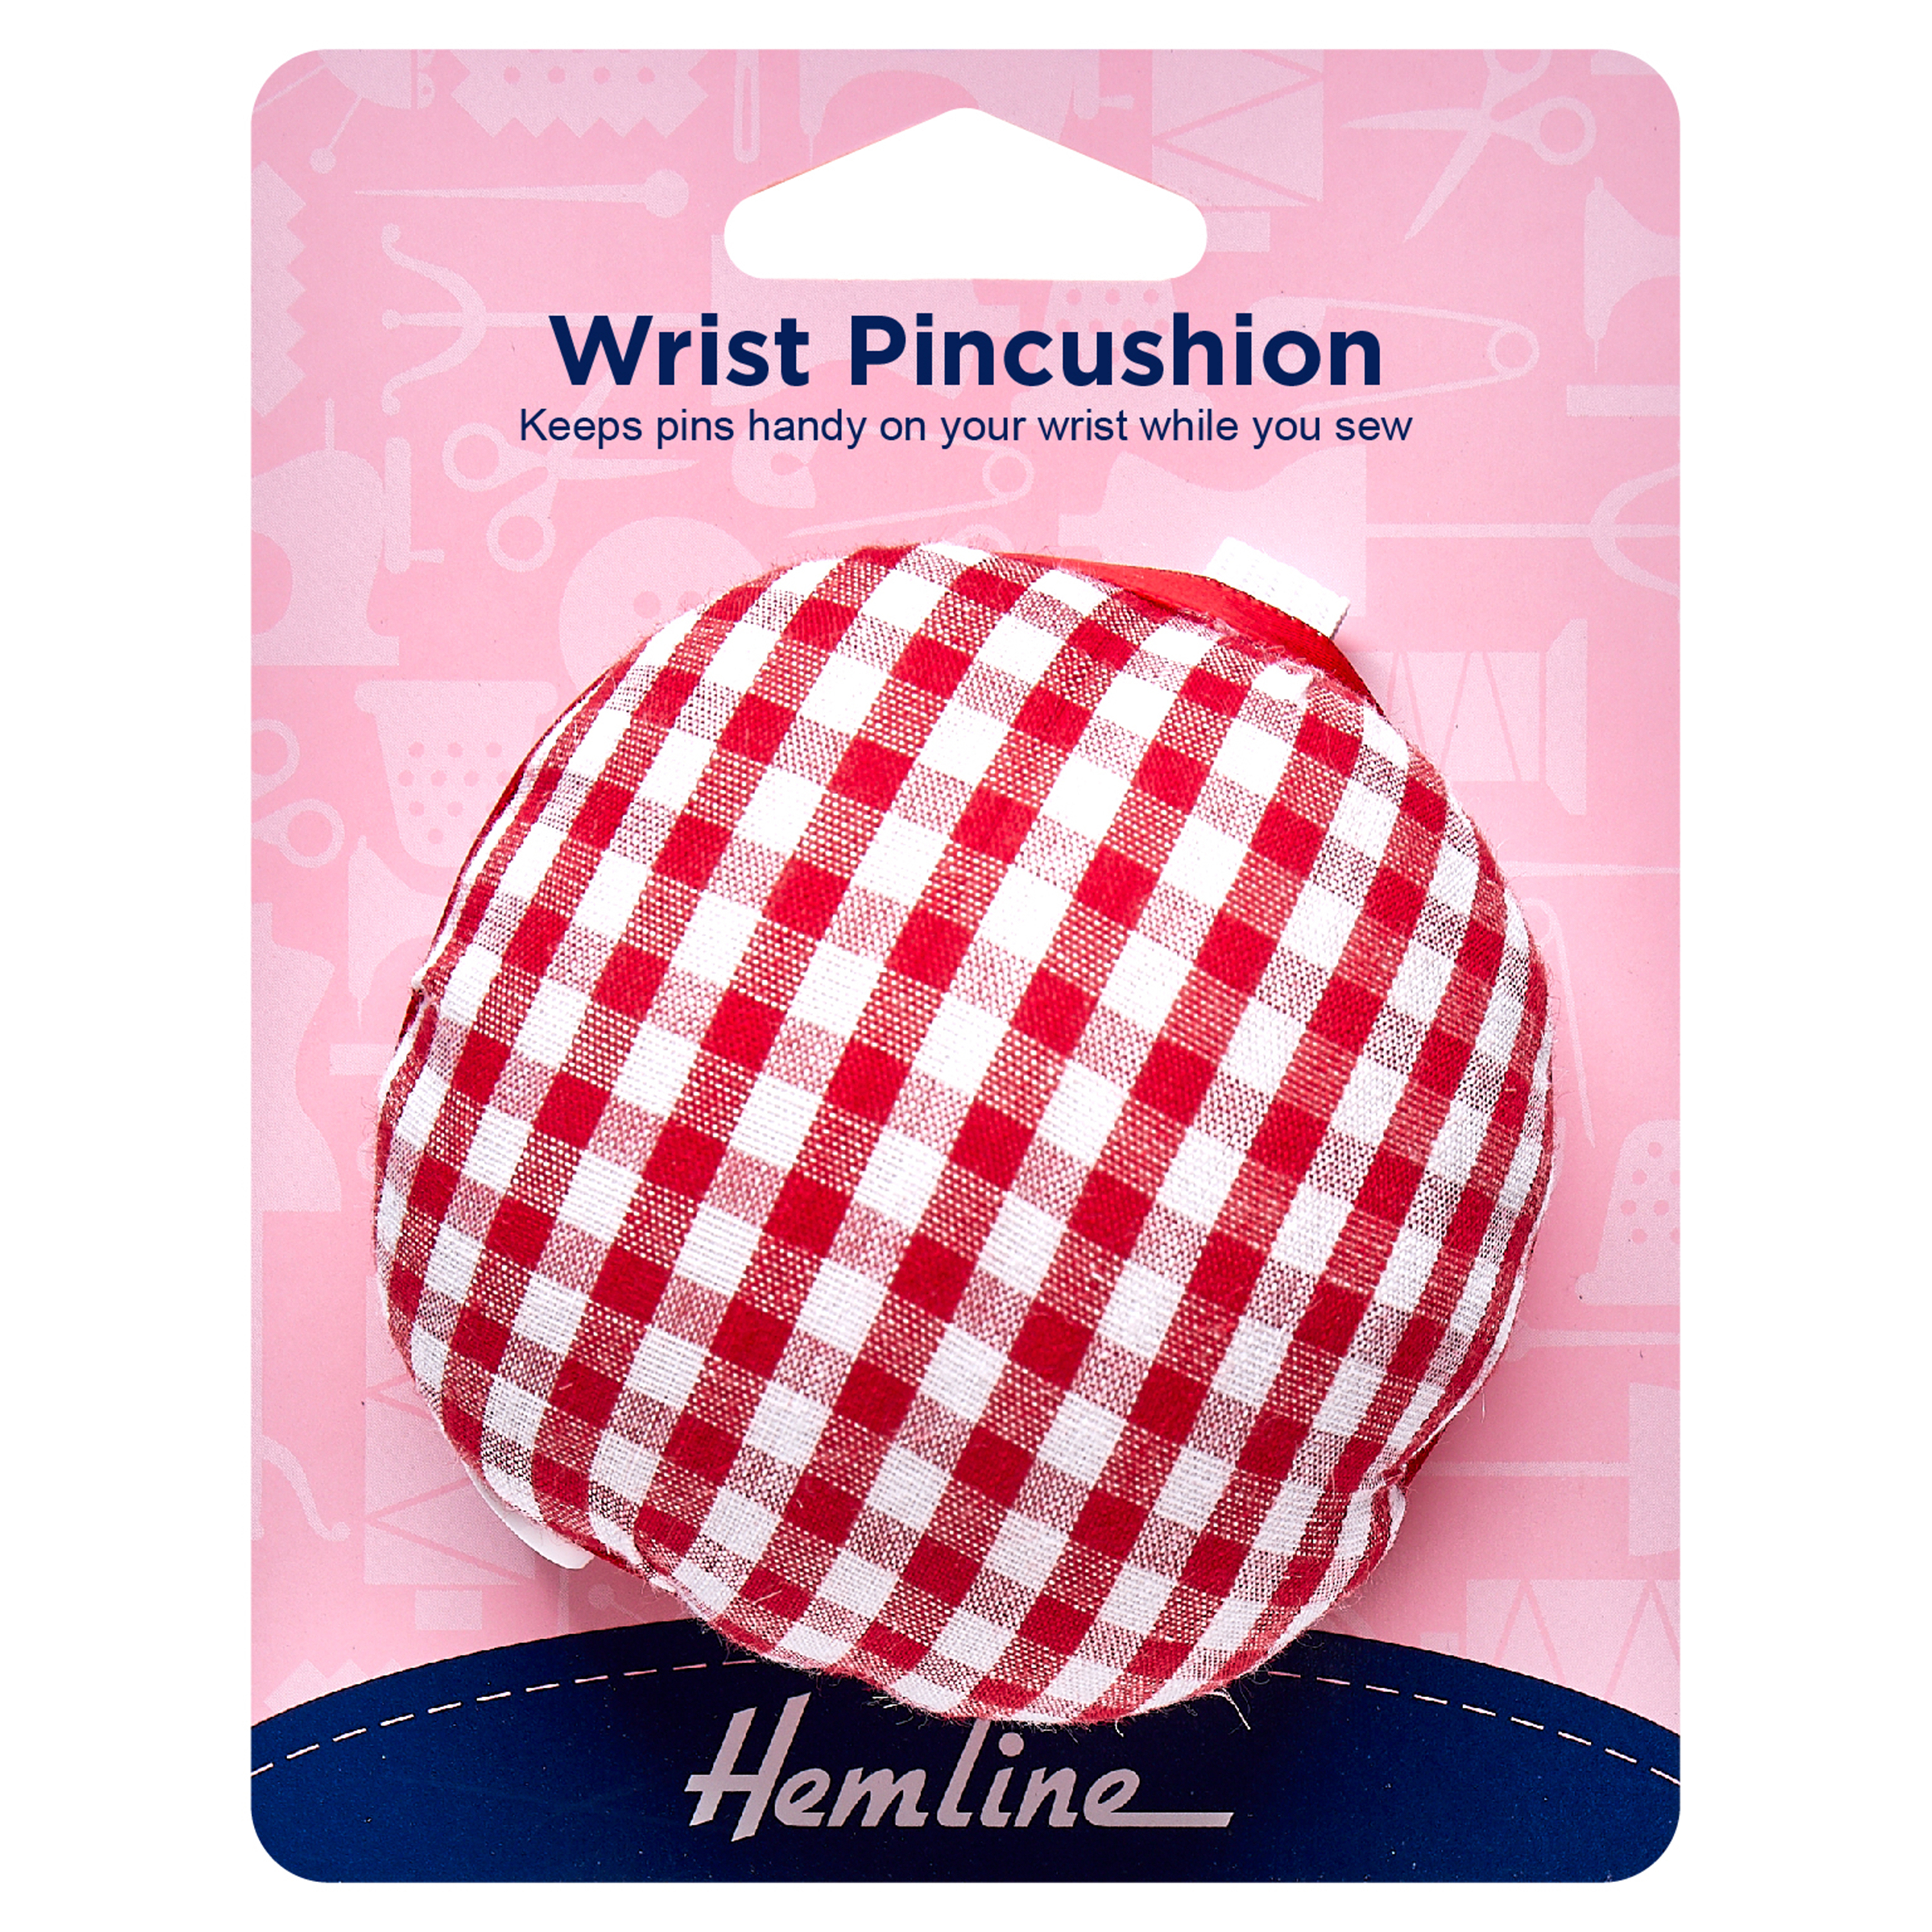 Hemline Wrist Pin Cushion - Picture 1 of 1